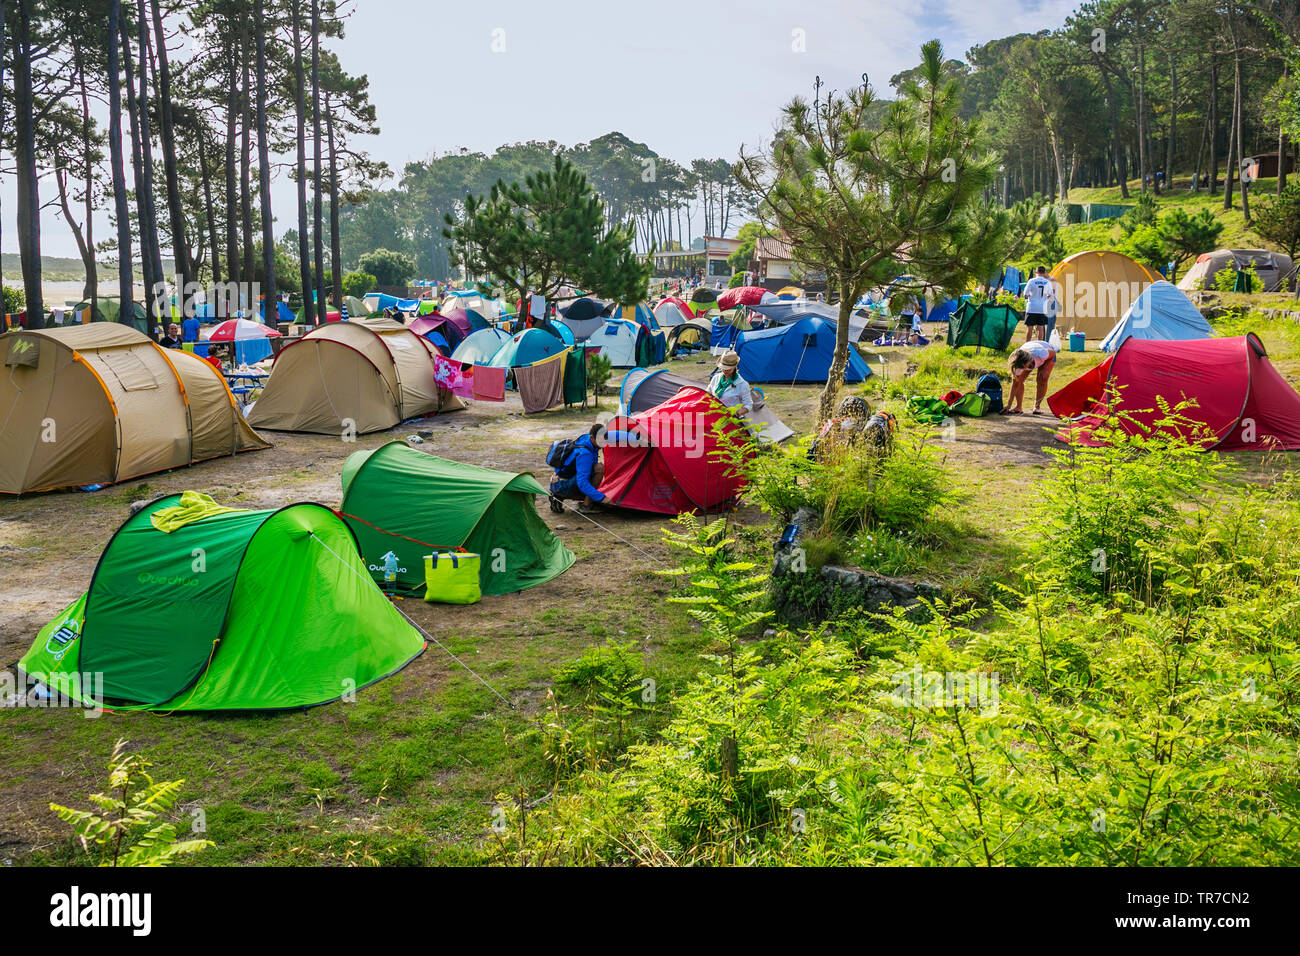 Camping park spain fotografías e imágenes de alta resolución - Alamy